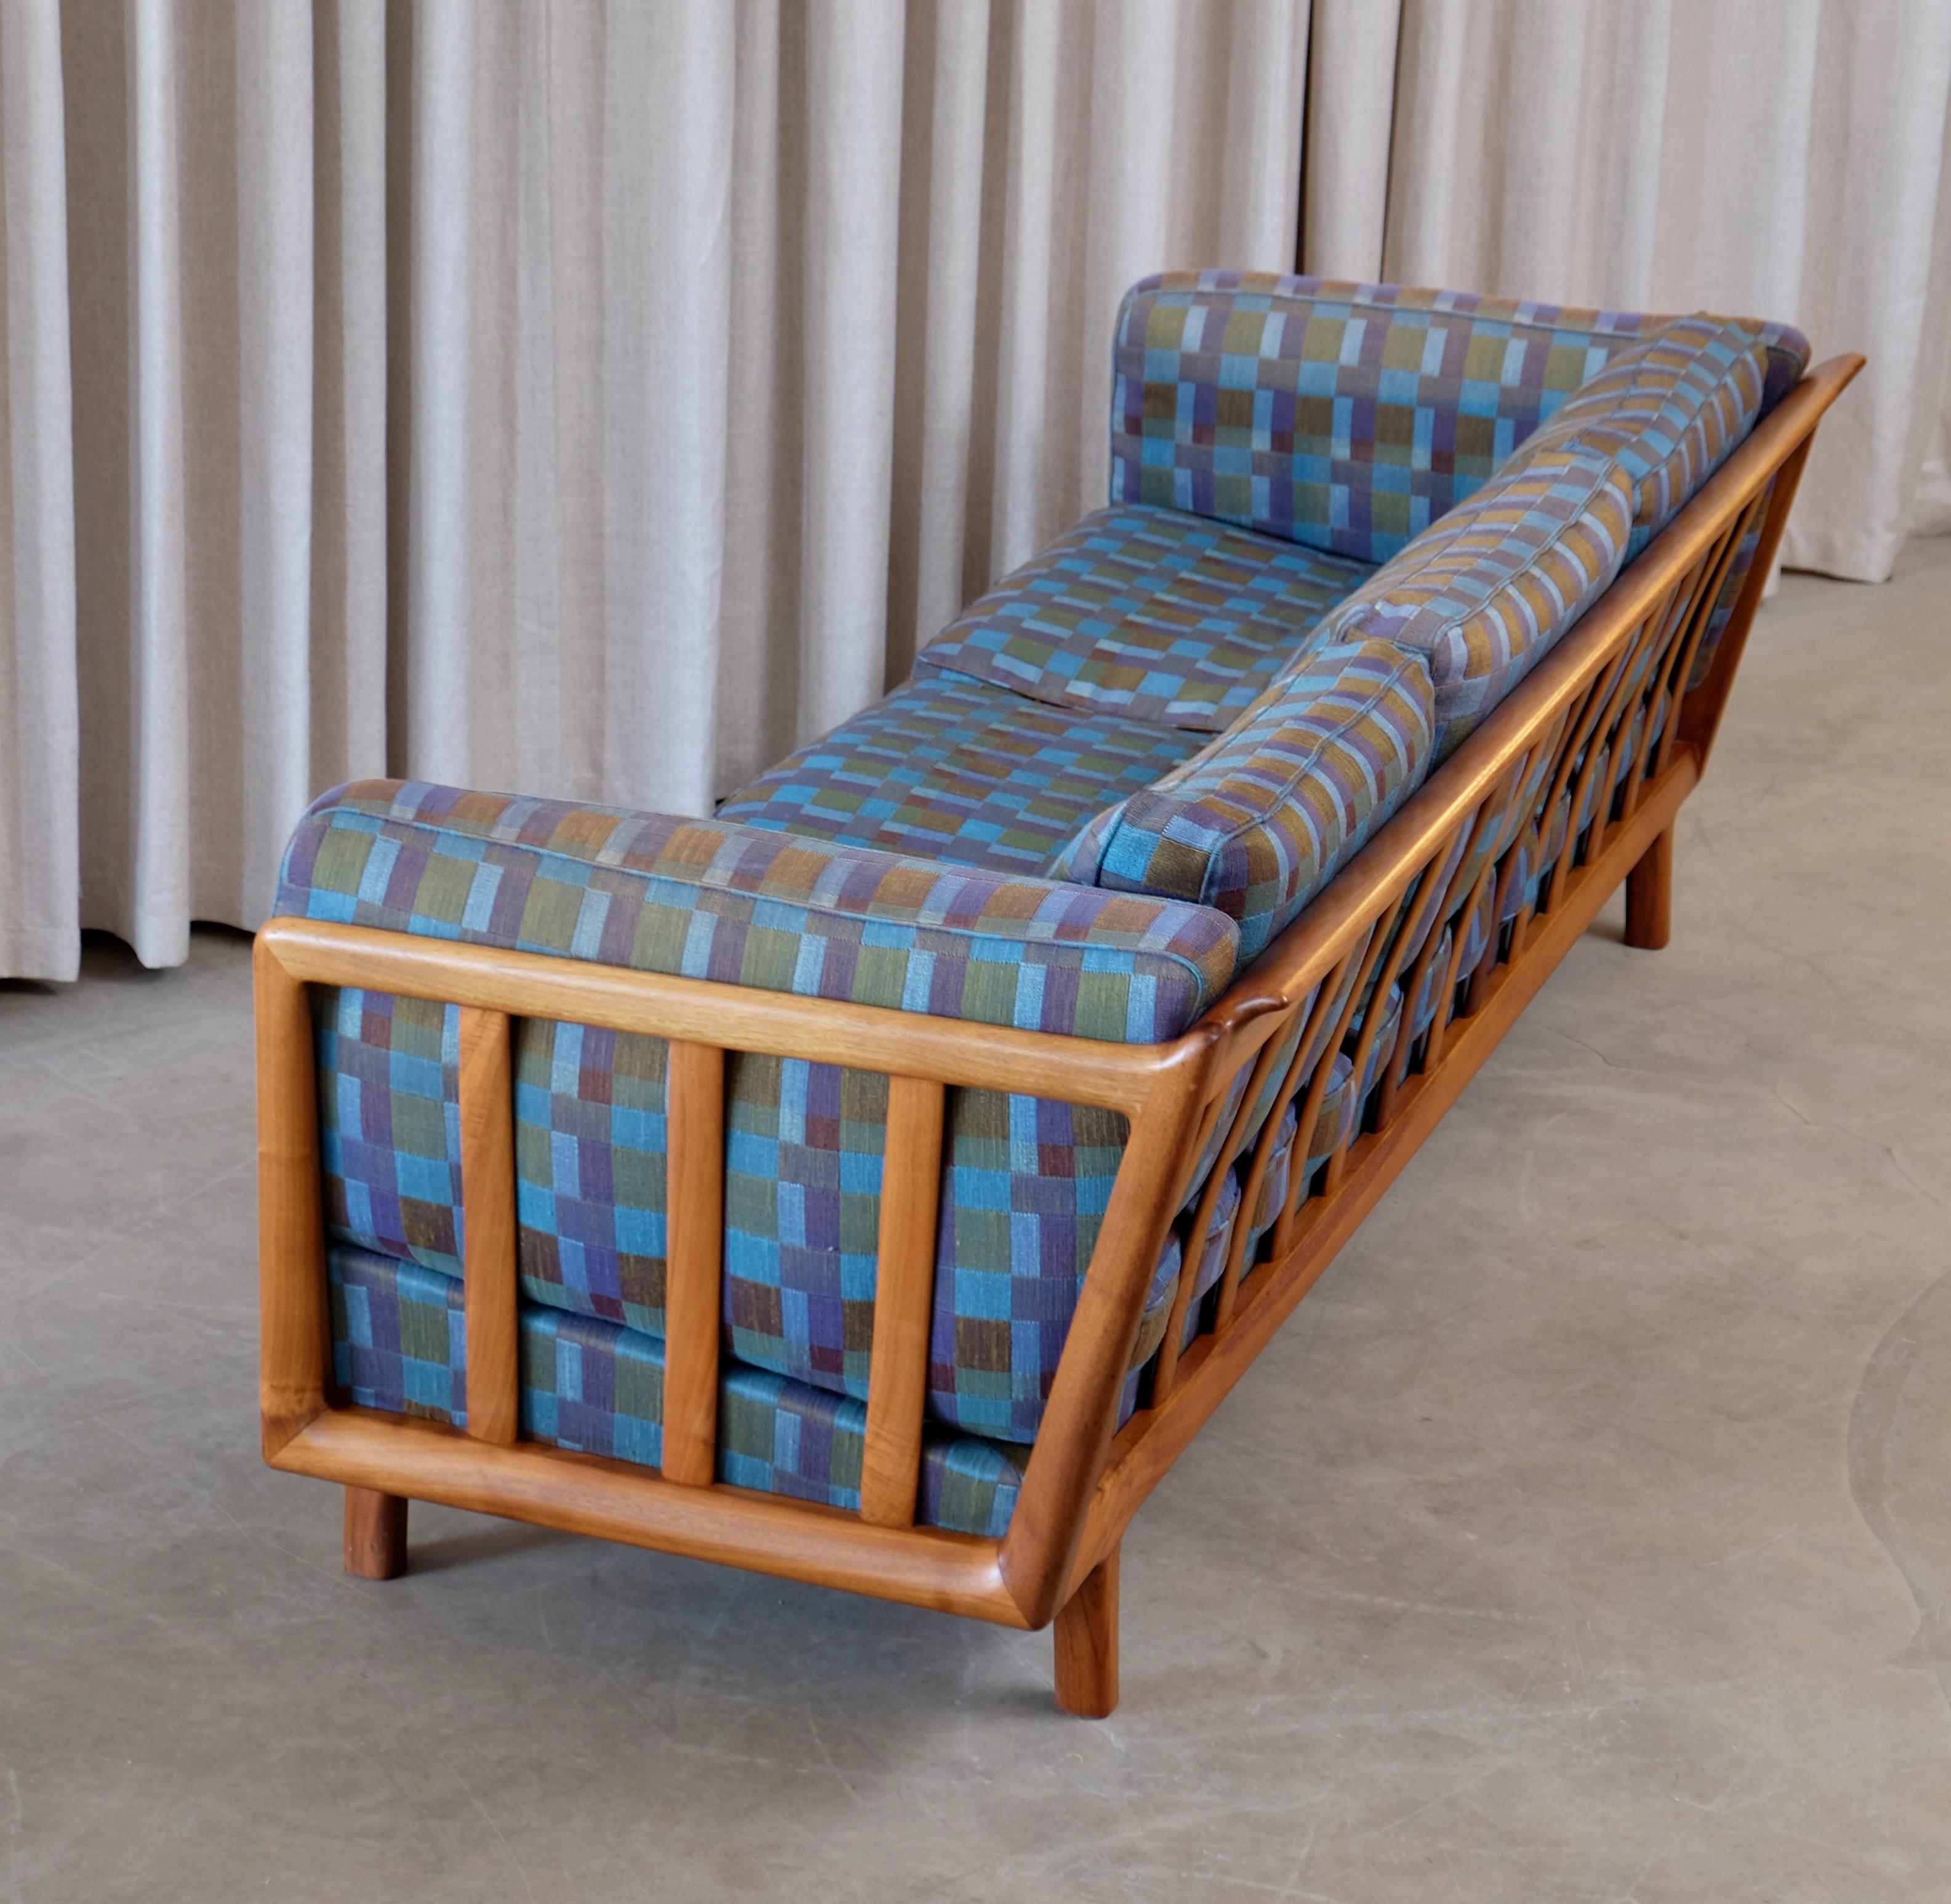 Åke Nilsson 'Roma' sofa by DUX, Sweden, 1960s For Sale 1